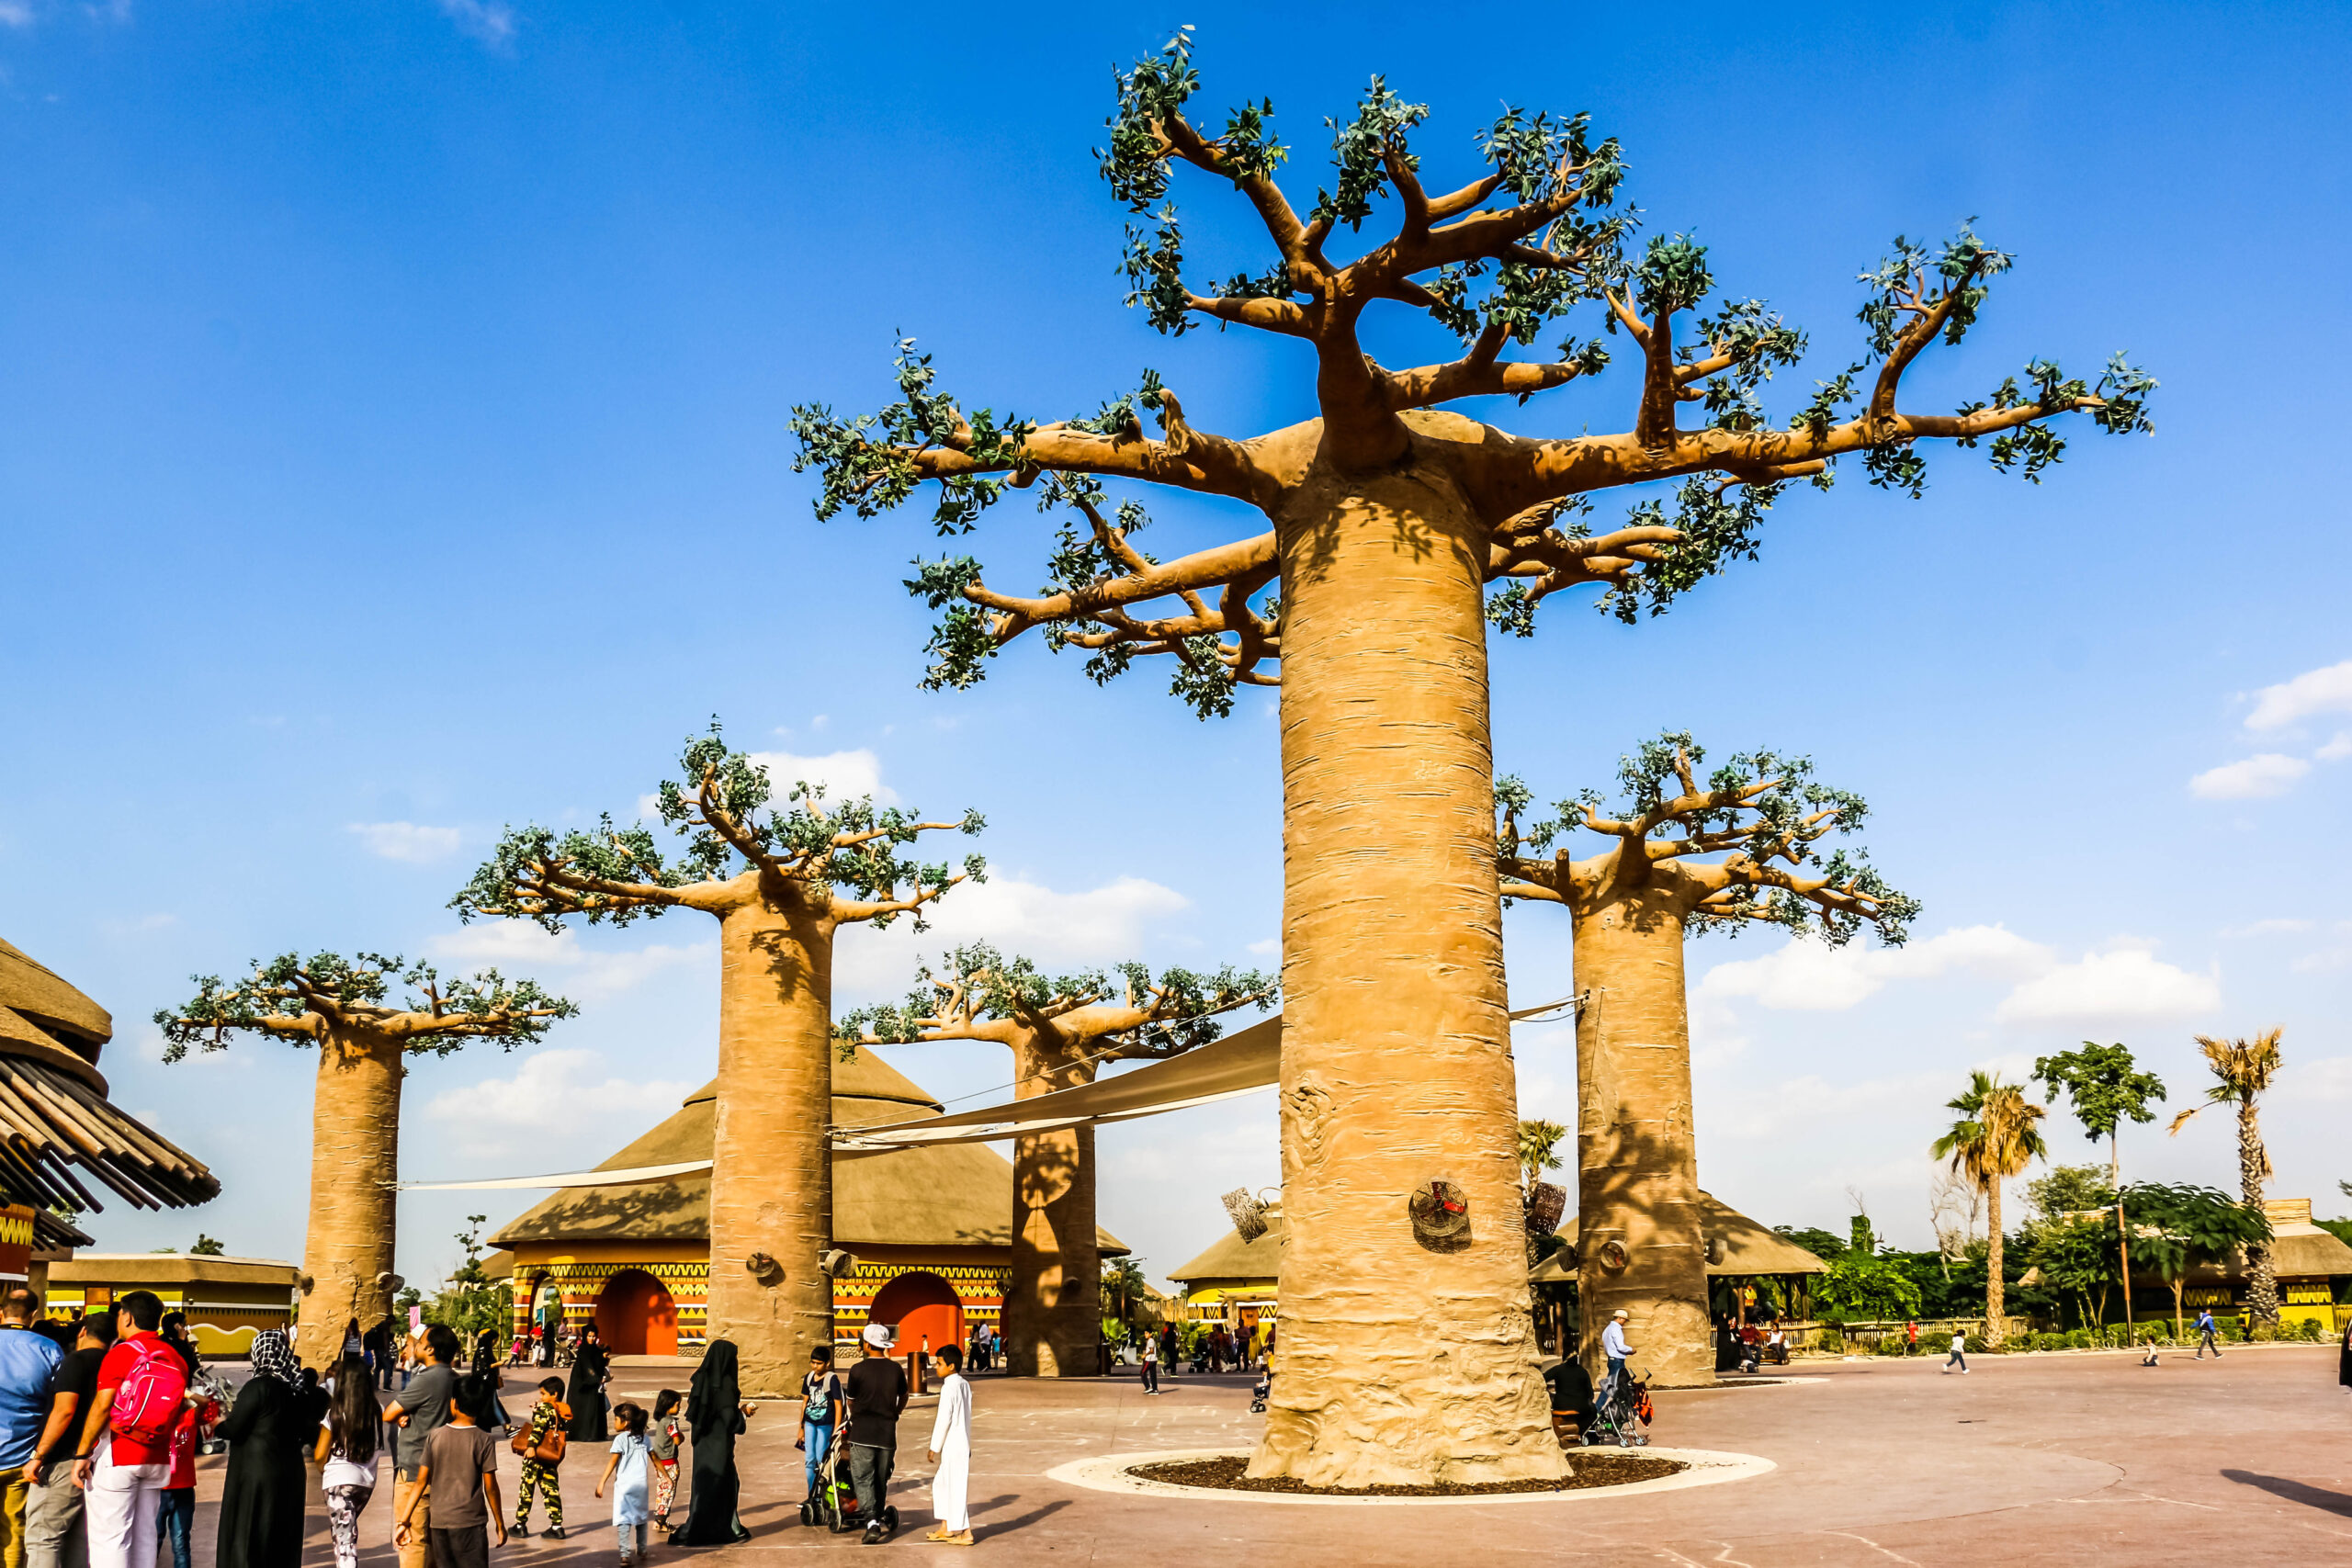 Dubai Safari Park - Baobabs